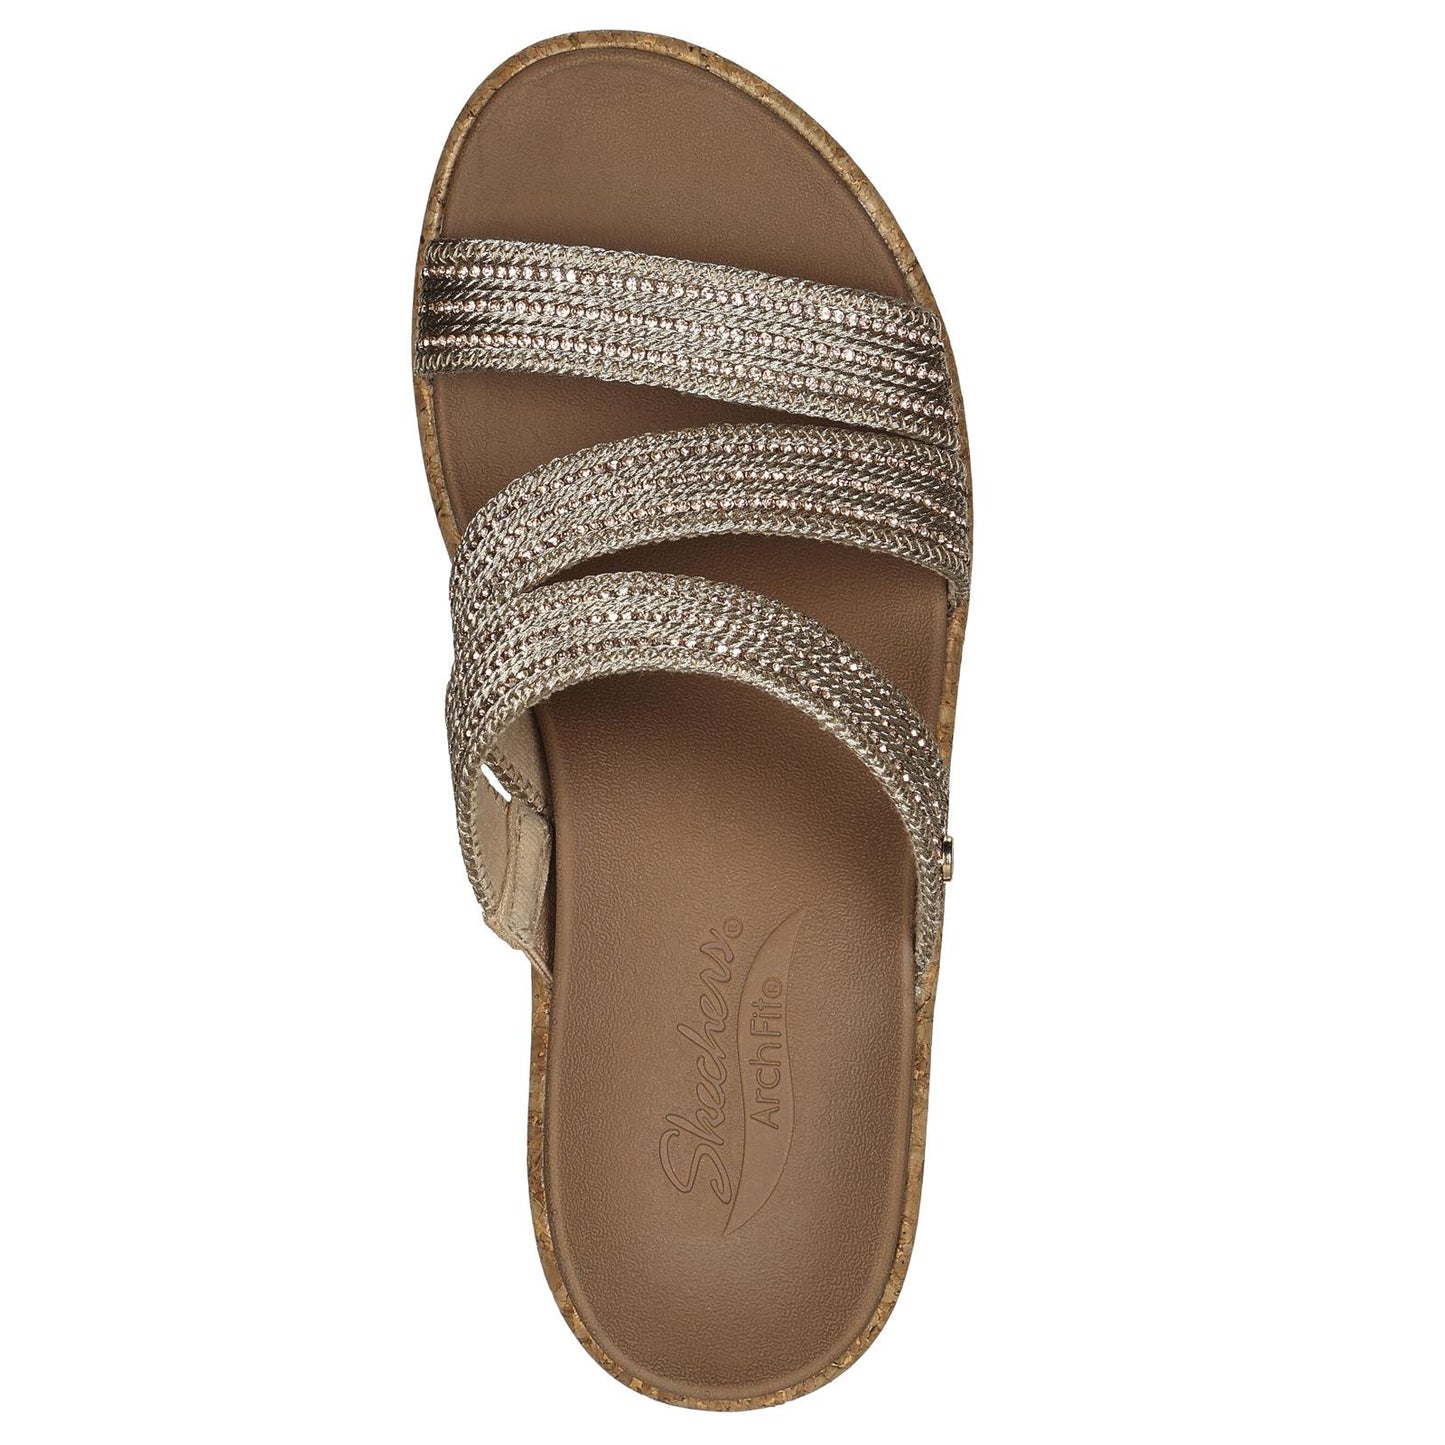 Skechers Arch Fit Beverlee Always Classy Gold Slip On Wedge Sandals